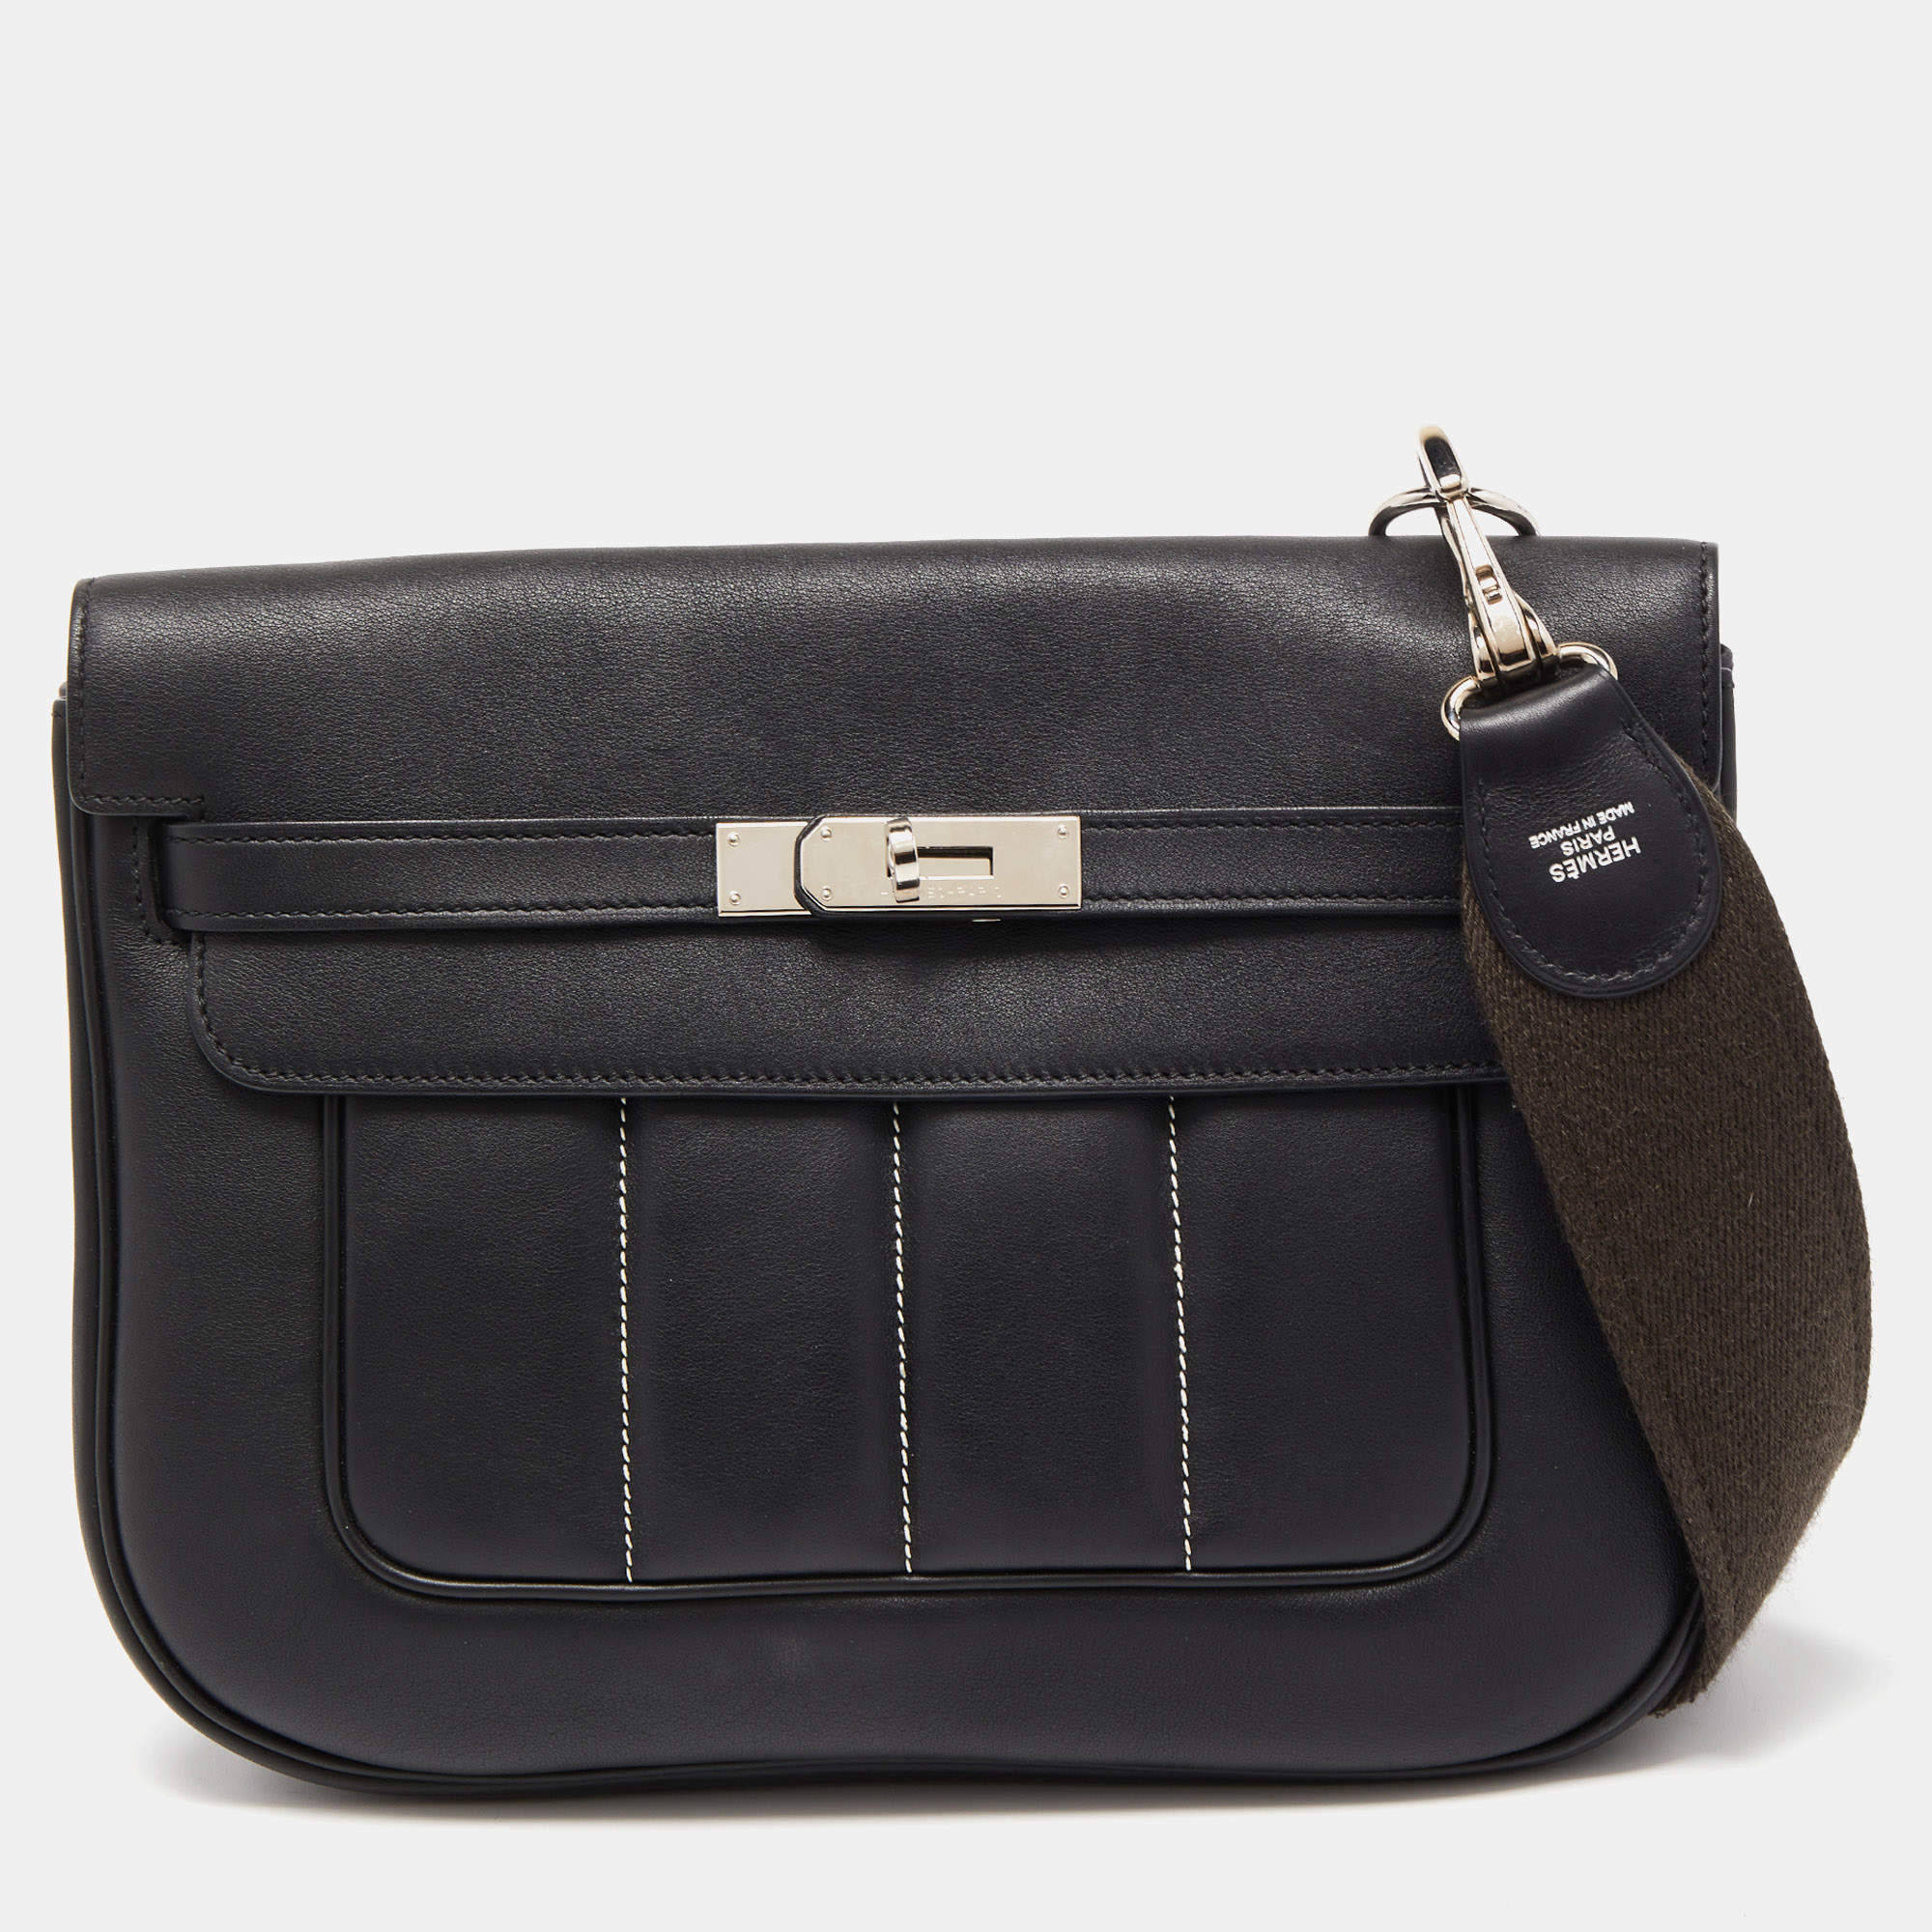 Hermes 28cm Black Swift Leather Palladium Plated Berline Bag